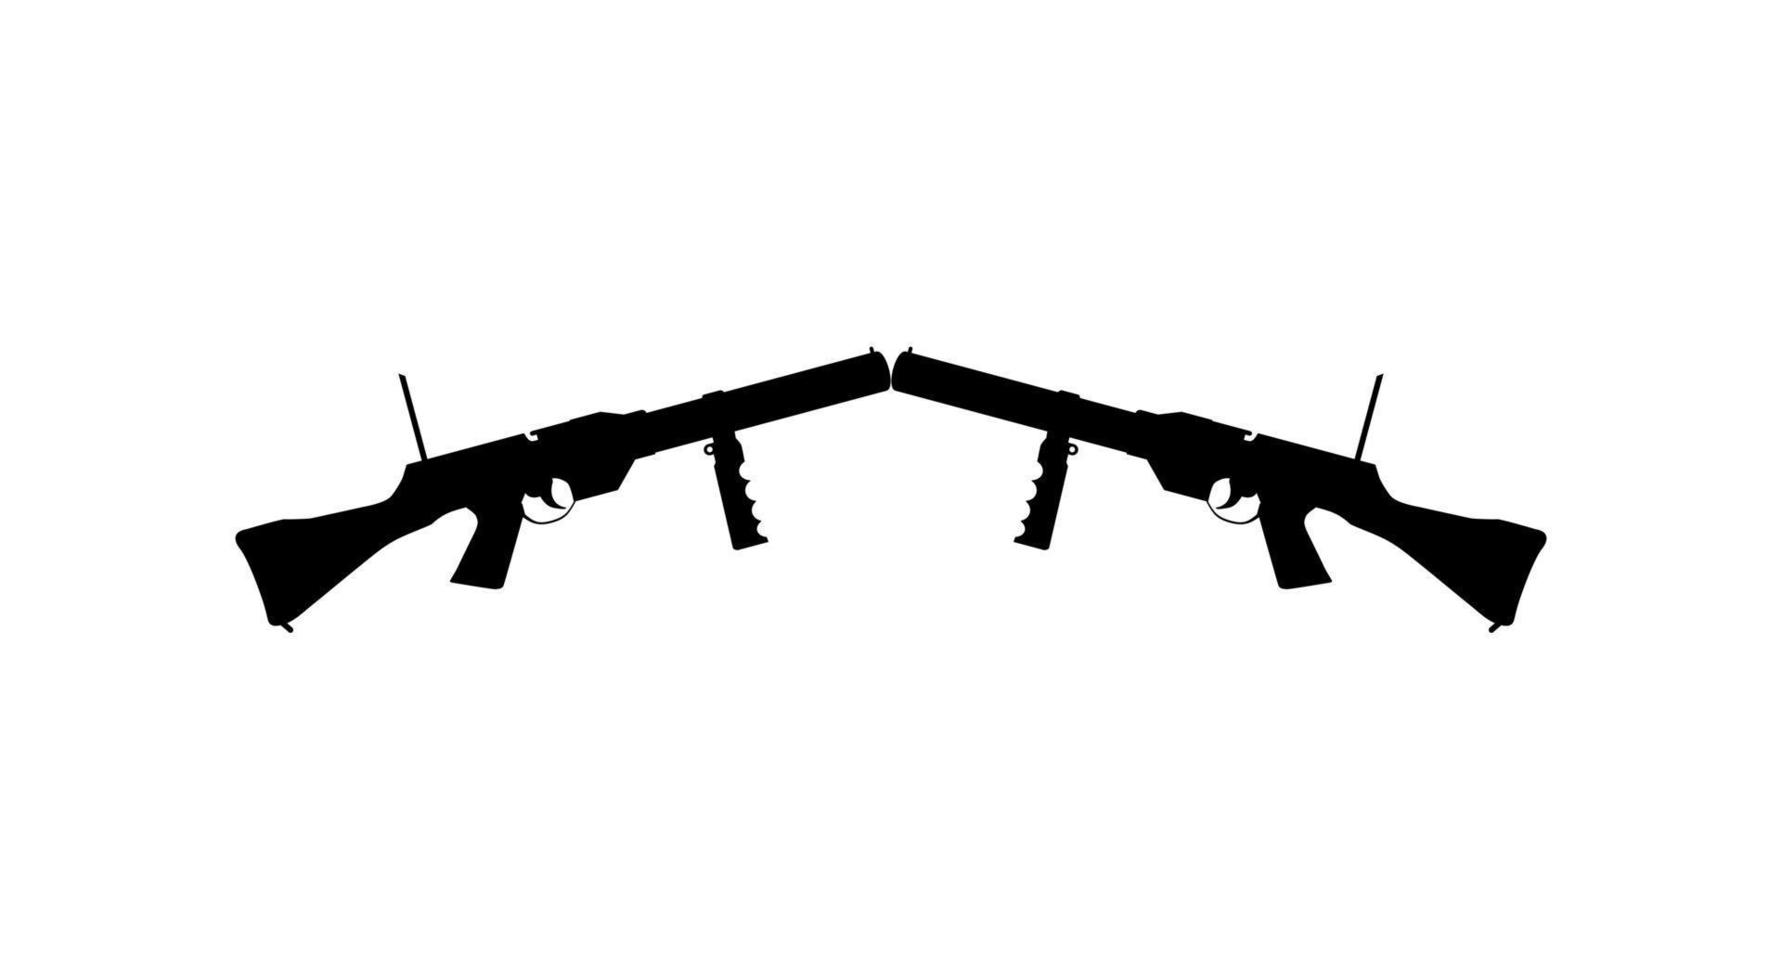 silueta de arma para logotipo, pictograma, ilustración de arte, sitio web o elemento de diseño gráfico. ilustración vectorial vector